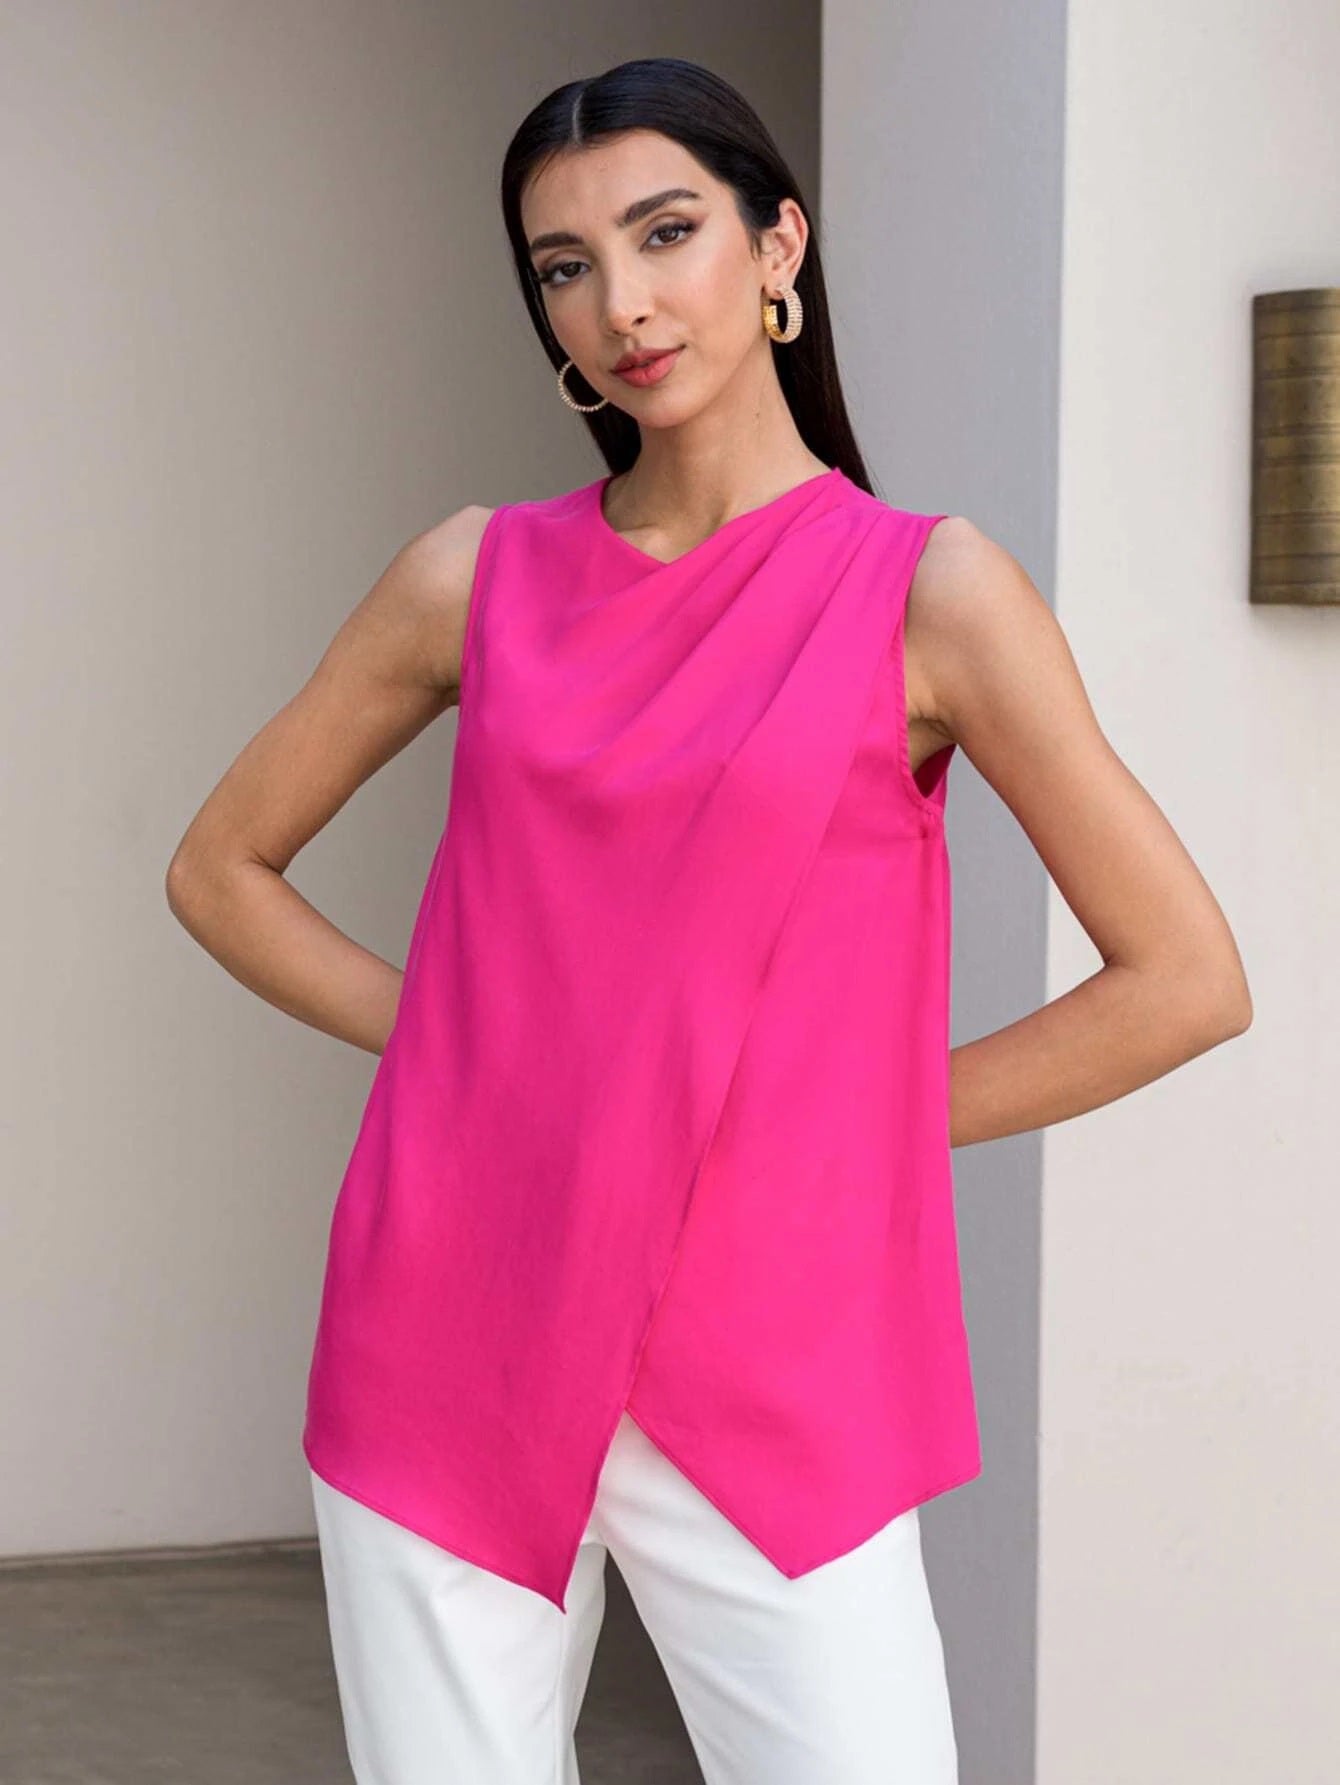 CM-TS193648 Women Elegant Seoul Style Sleeveless Draped Asymmetrical Top - Hot Pink